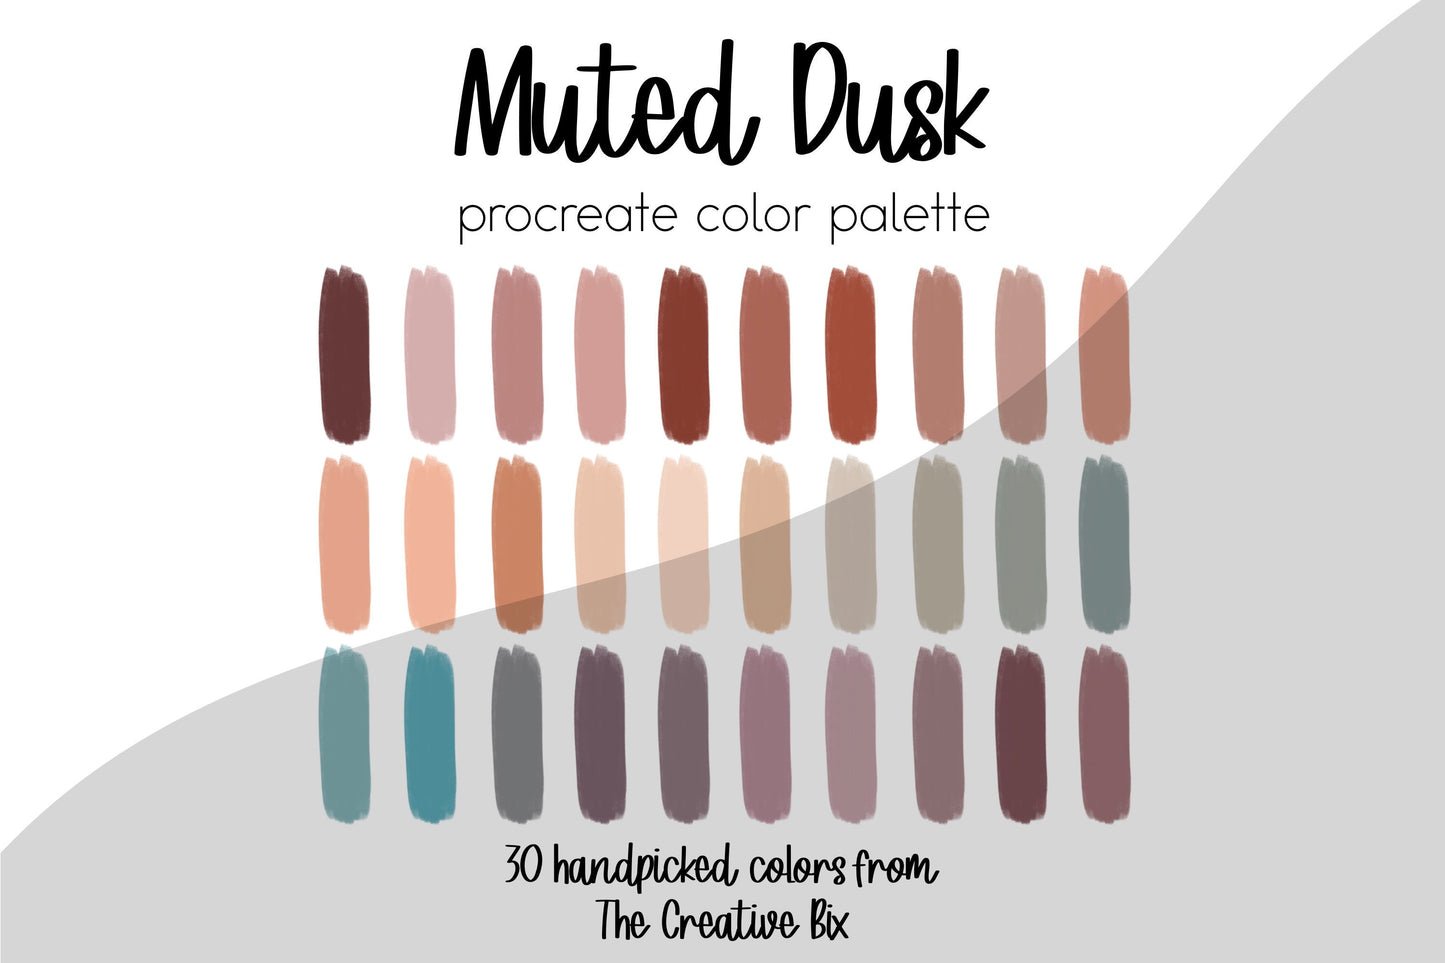 Muted Dusk Procreate Palette